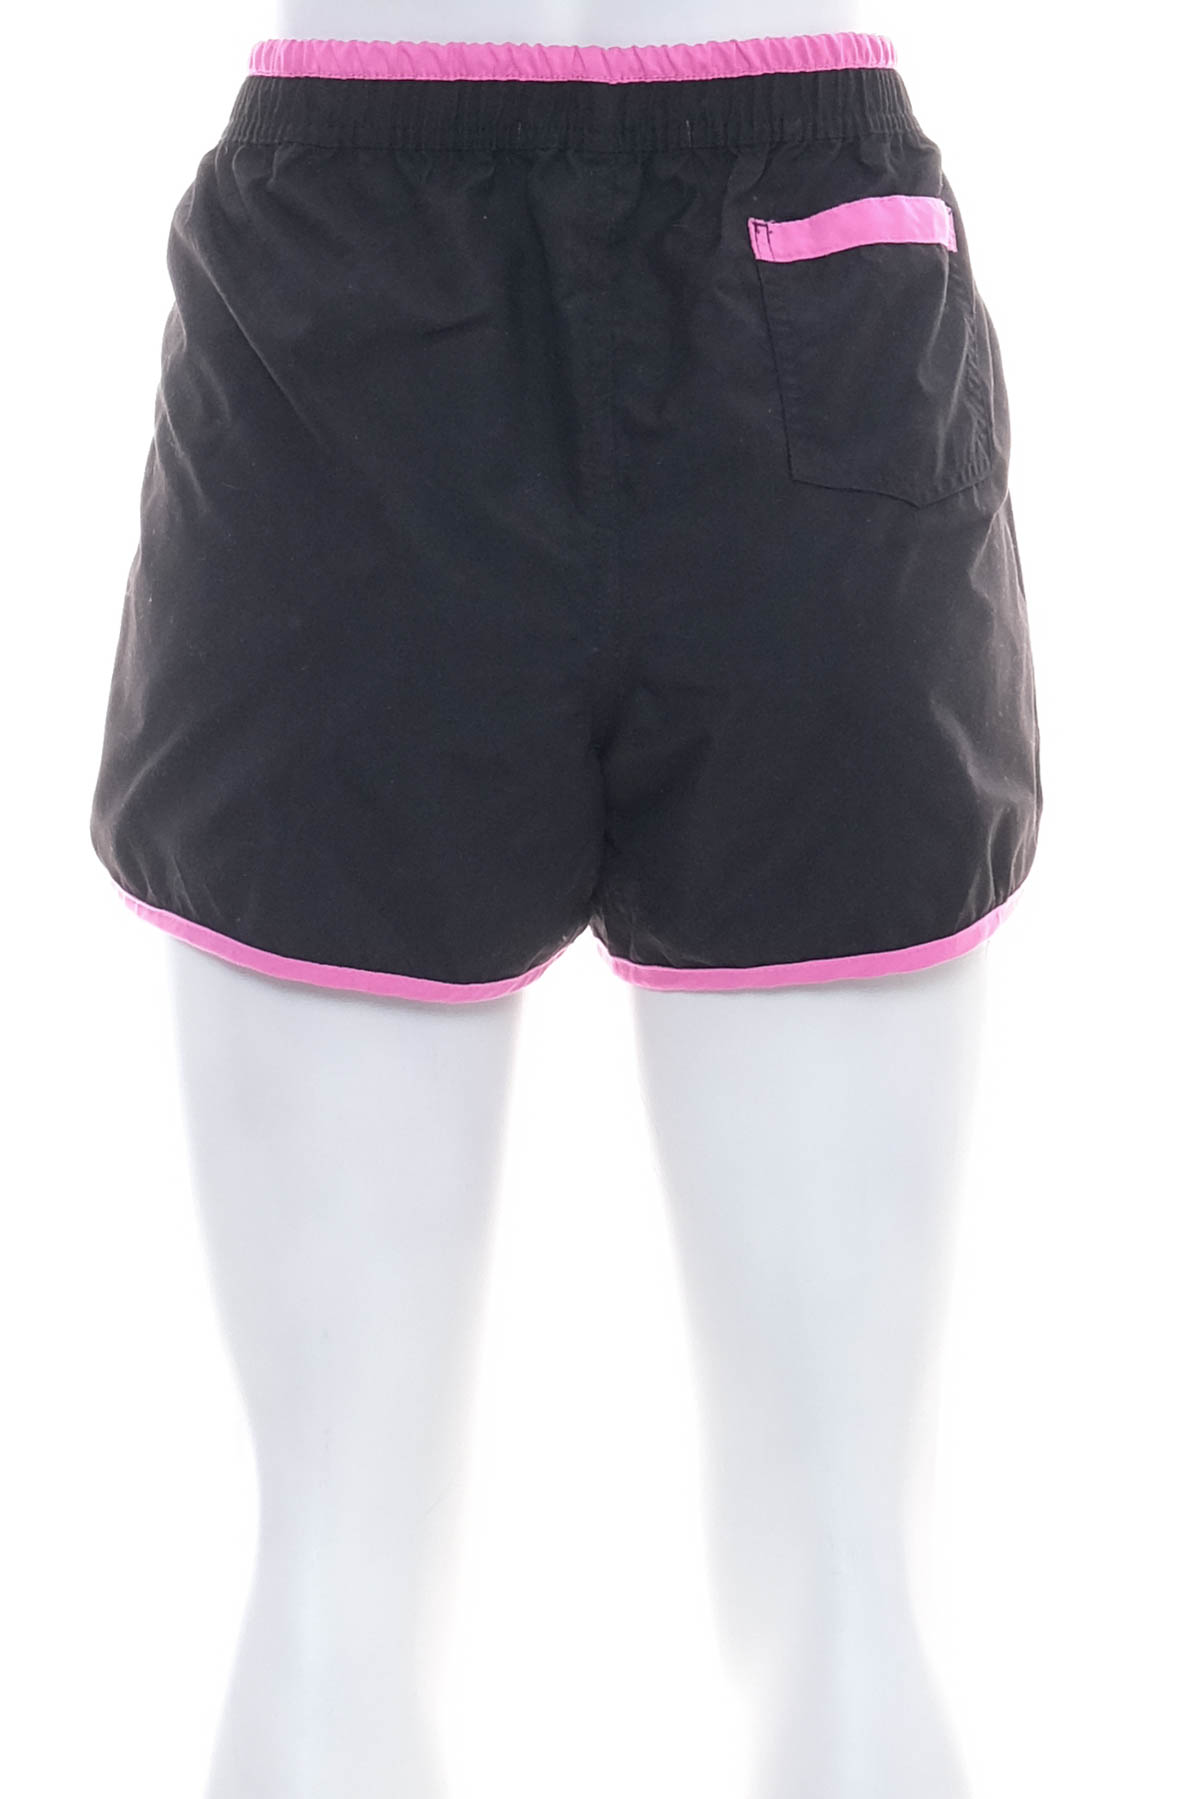 Female shorts - Nitelites - 1